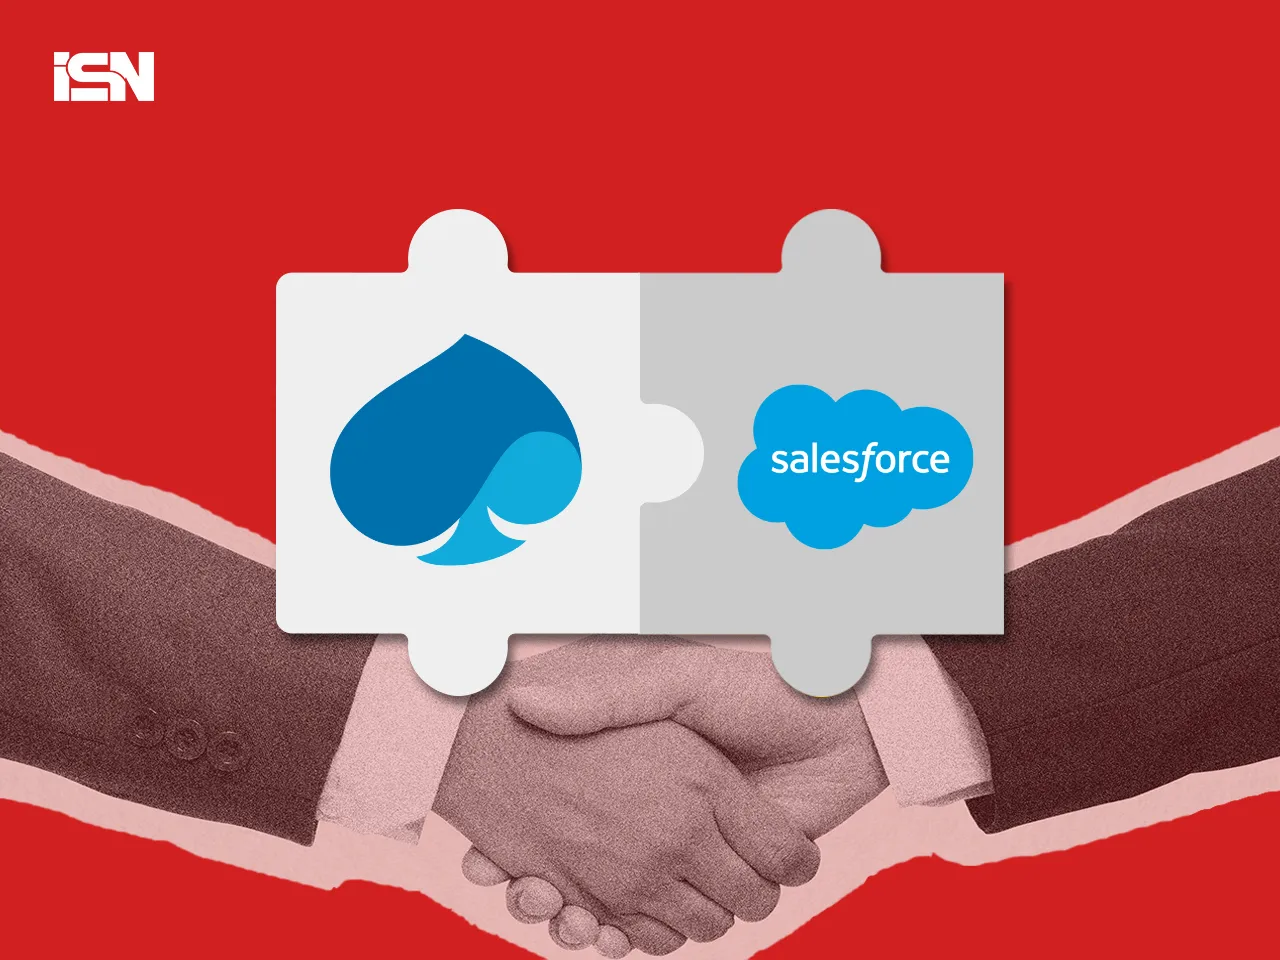 Capgemini partners with Salesforce